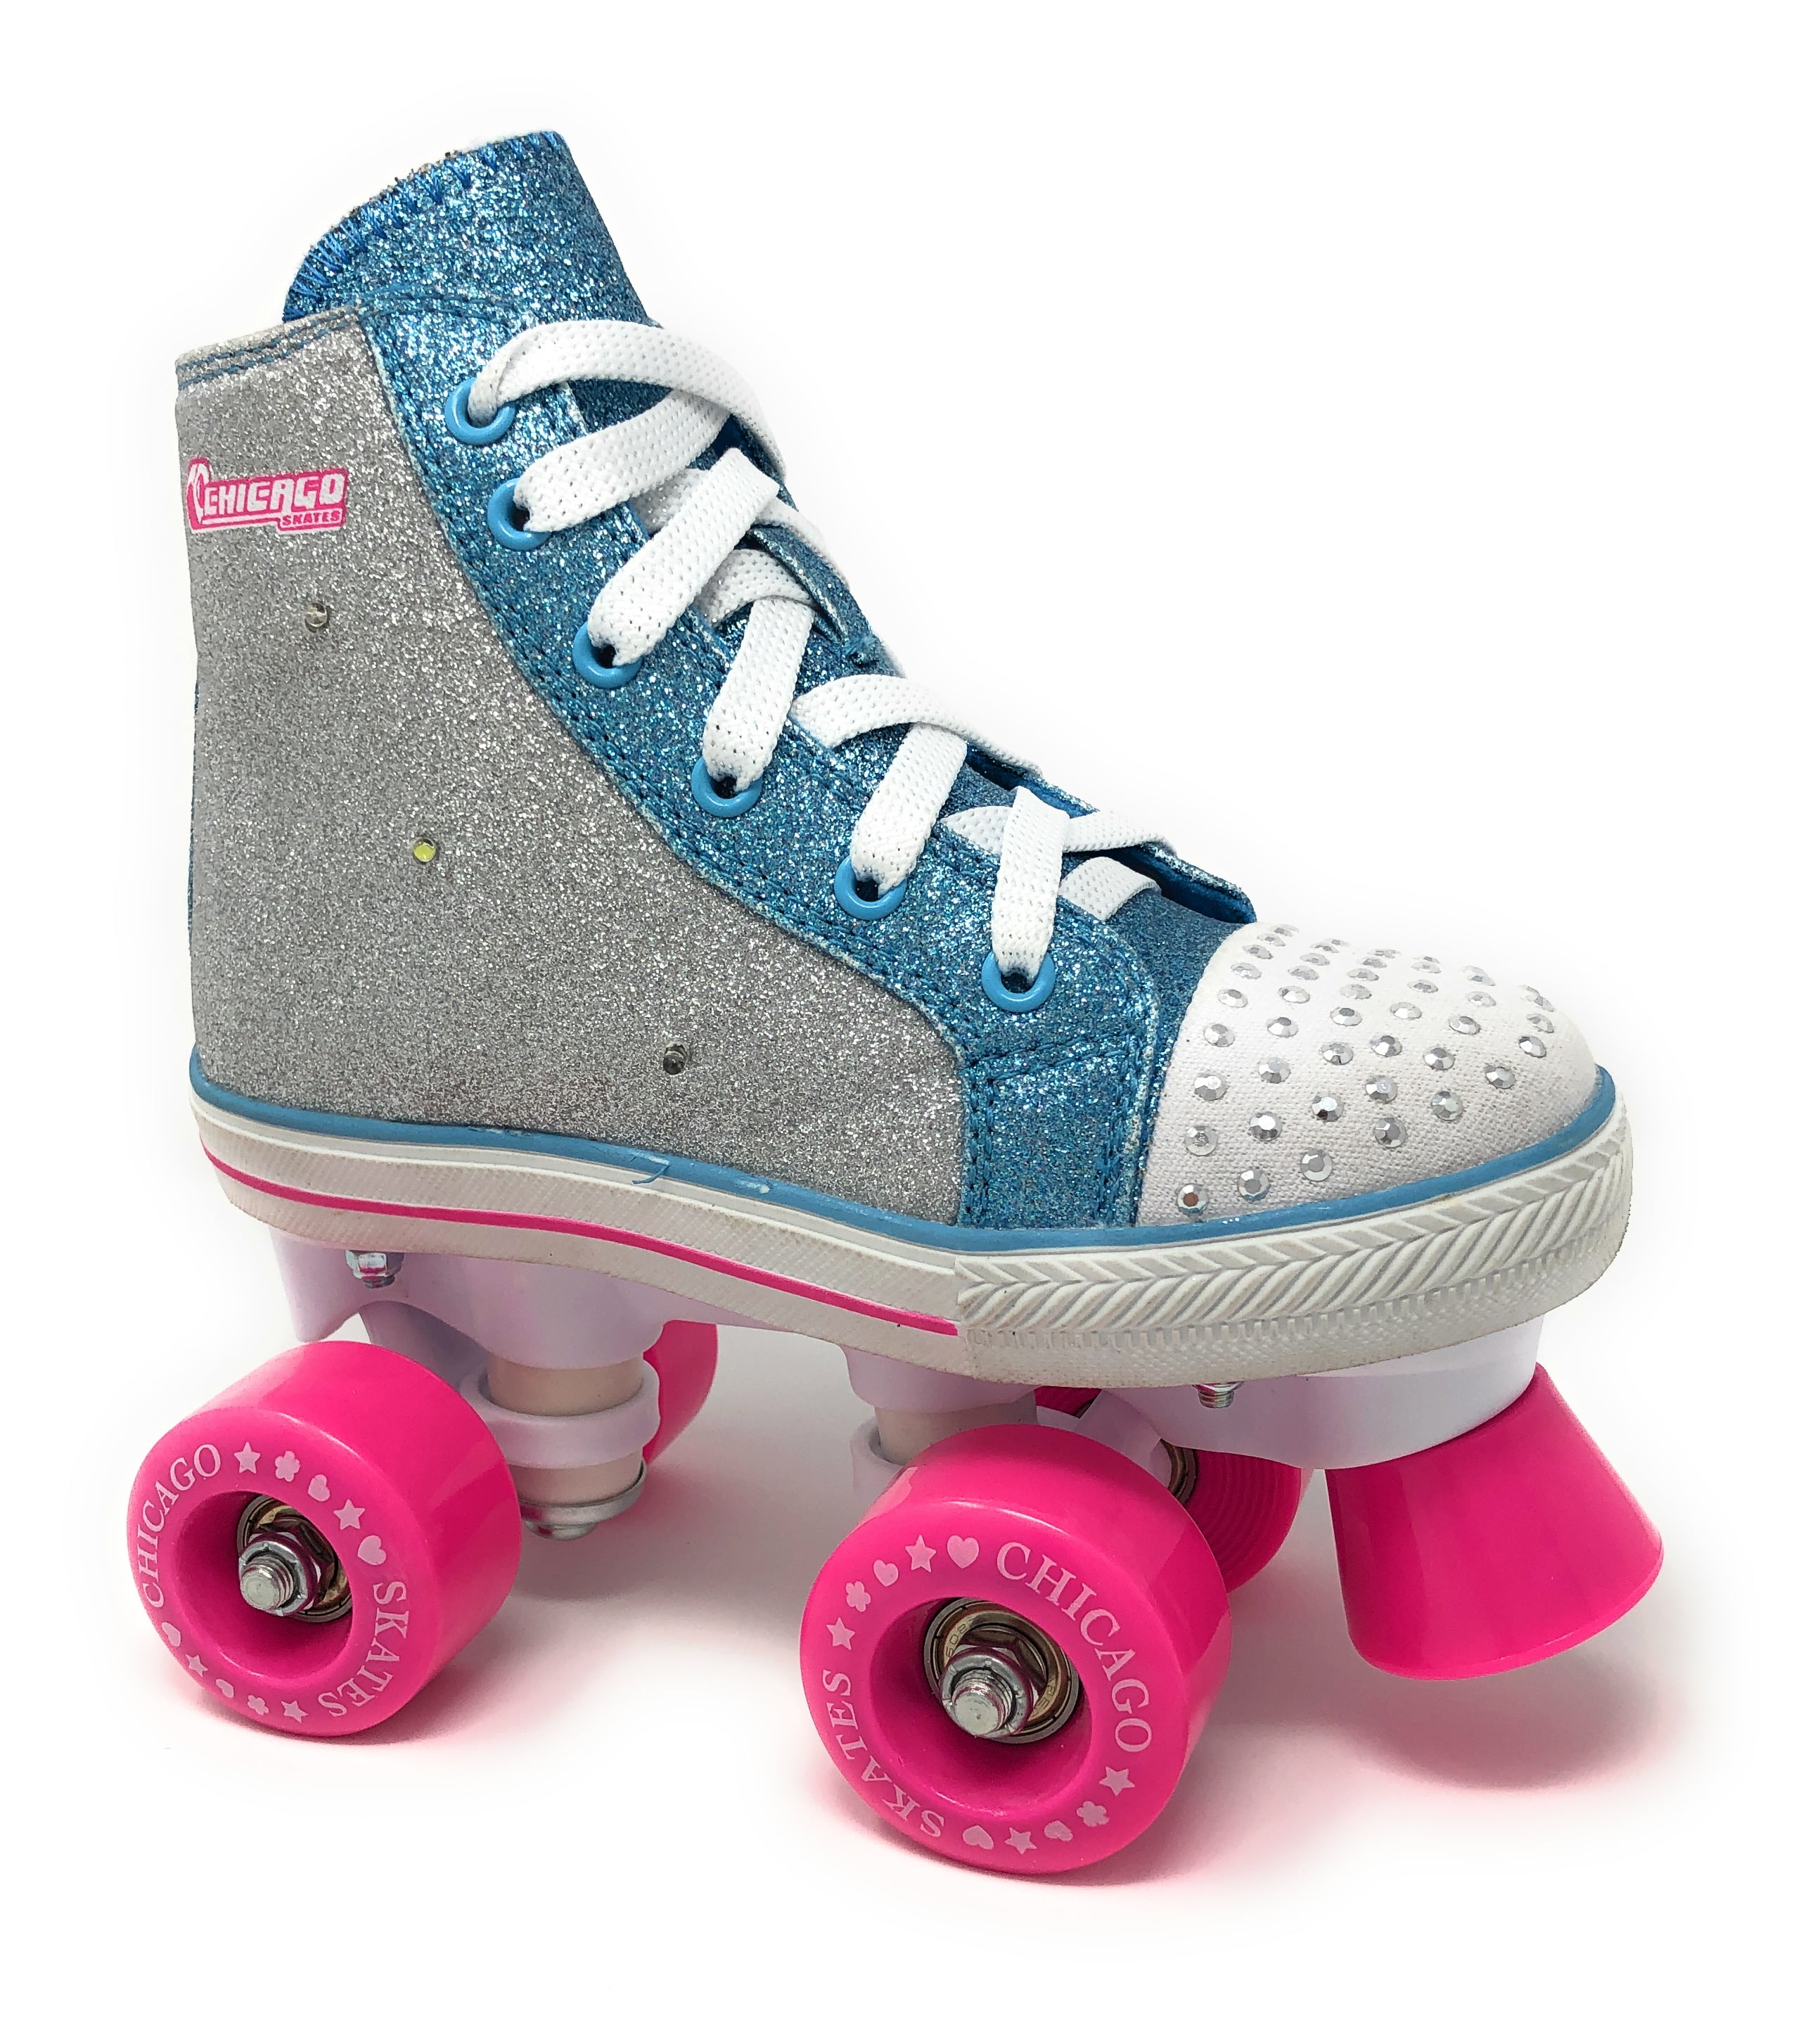 Azure Blue Awaken Adjustable Size Inline Roller Skates Kids Youth Boys Girls 